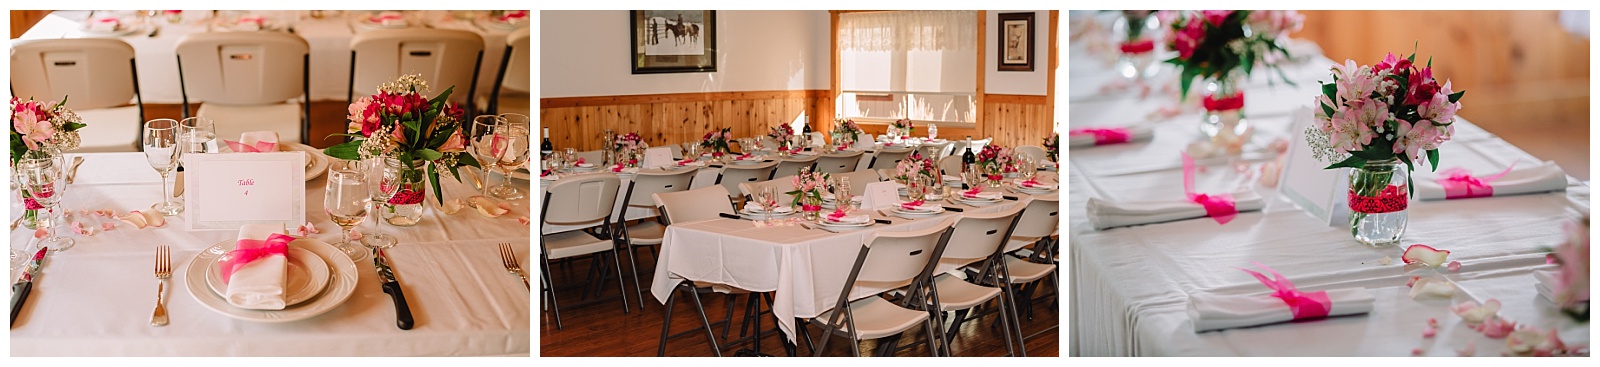 wedding reception dinner tables decorations